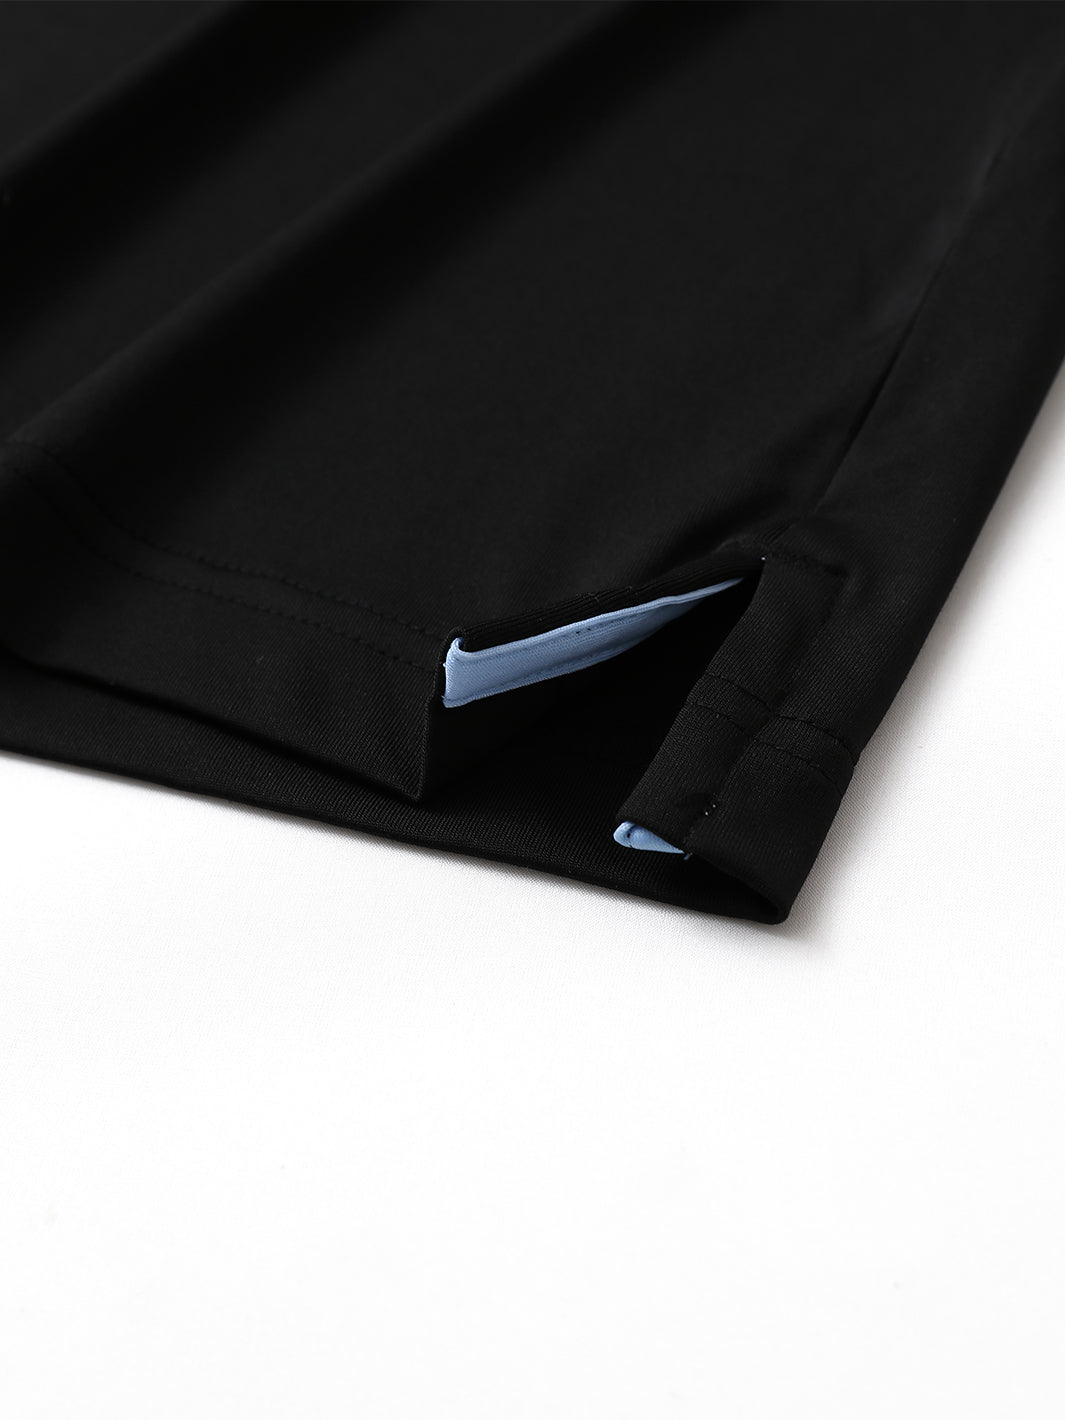 Men's Chest Print Golf Polo Shirts-Black2